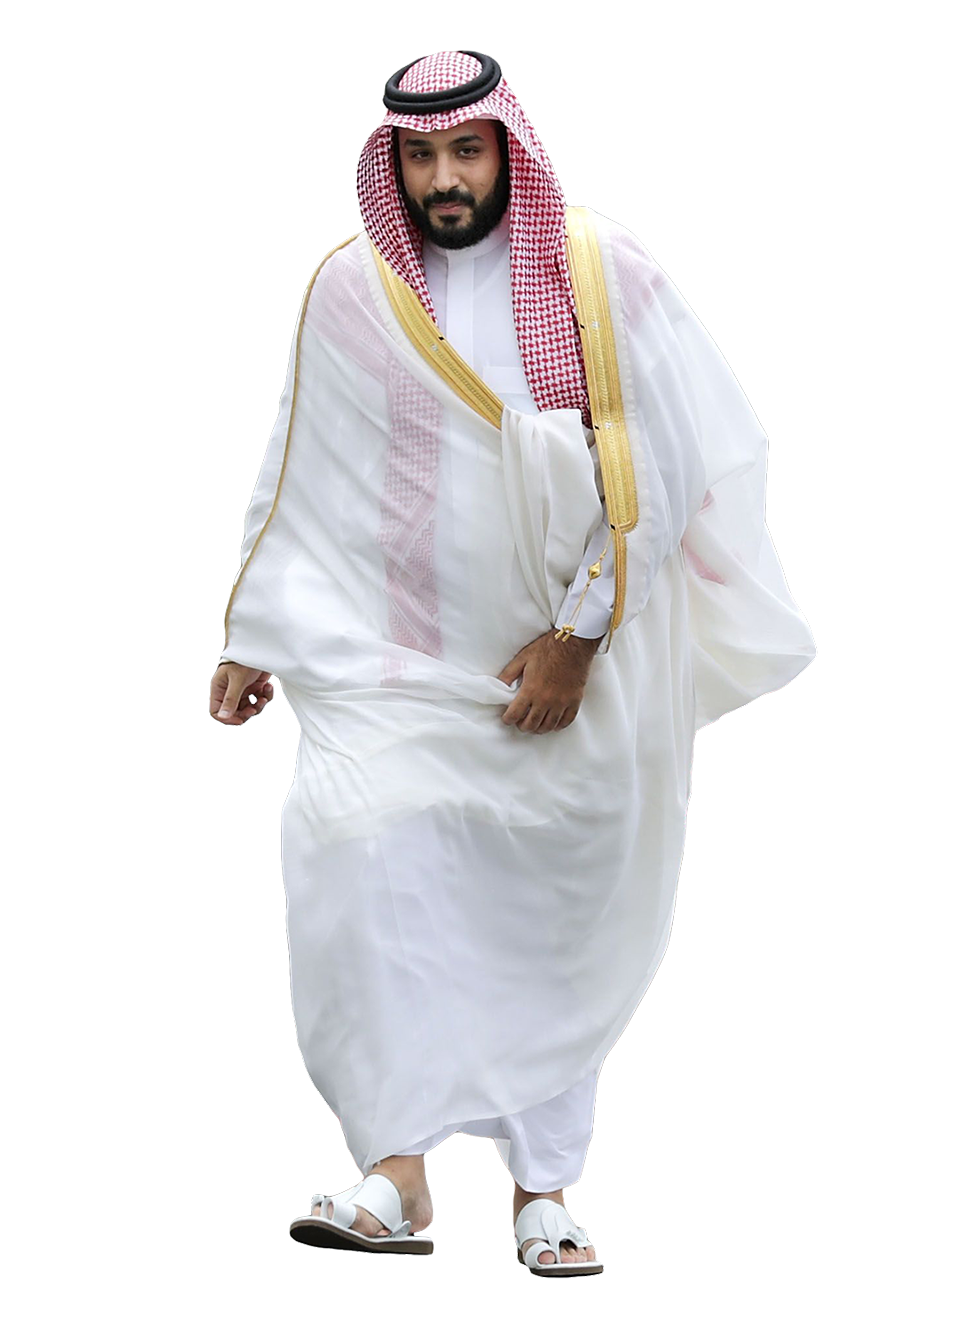 بن سلمان محمد محمد بن